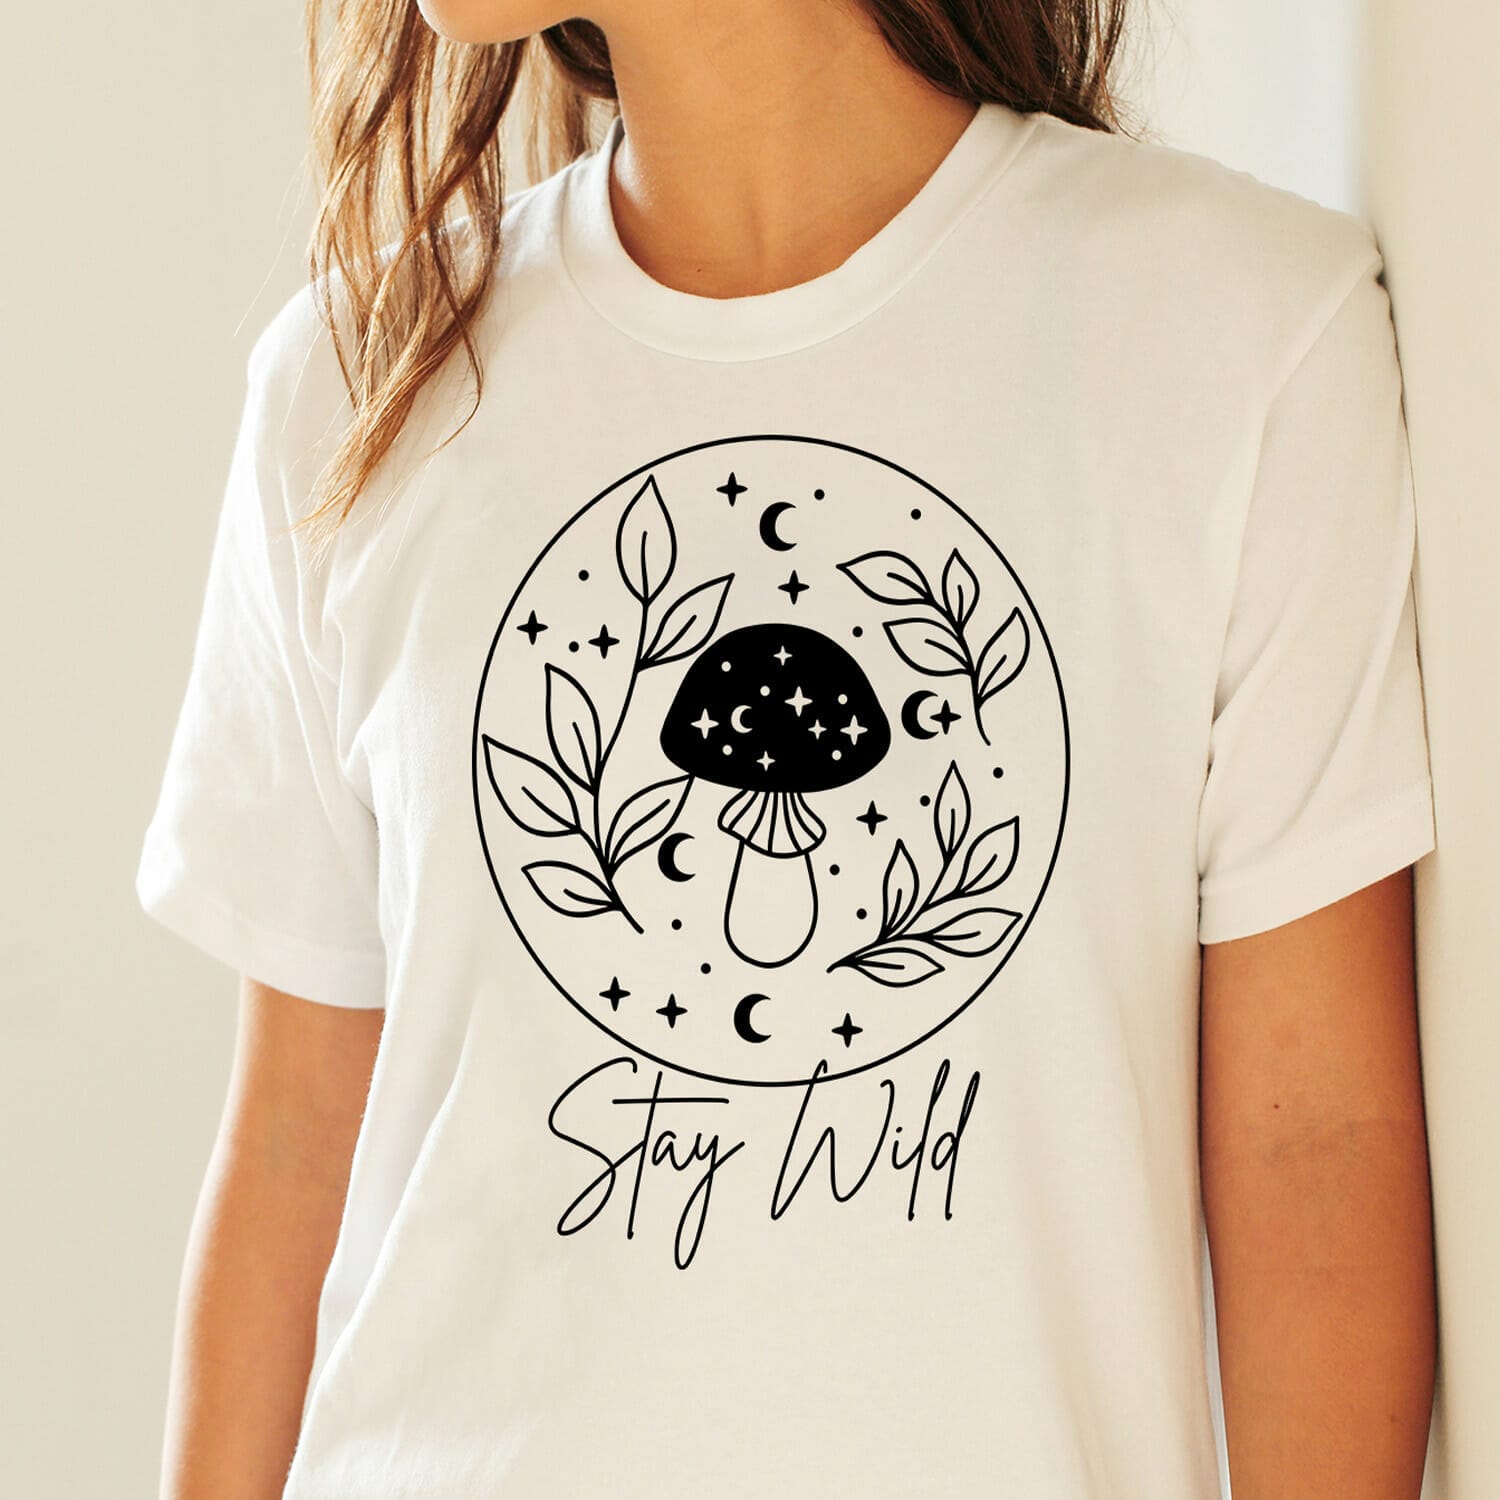 Boho Inspirational stay wild T-shirt Design